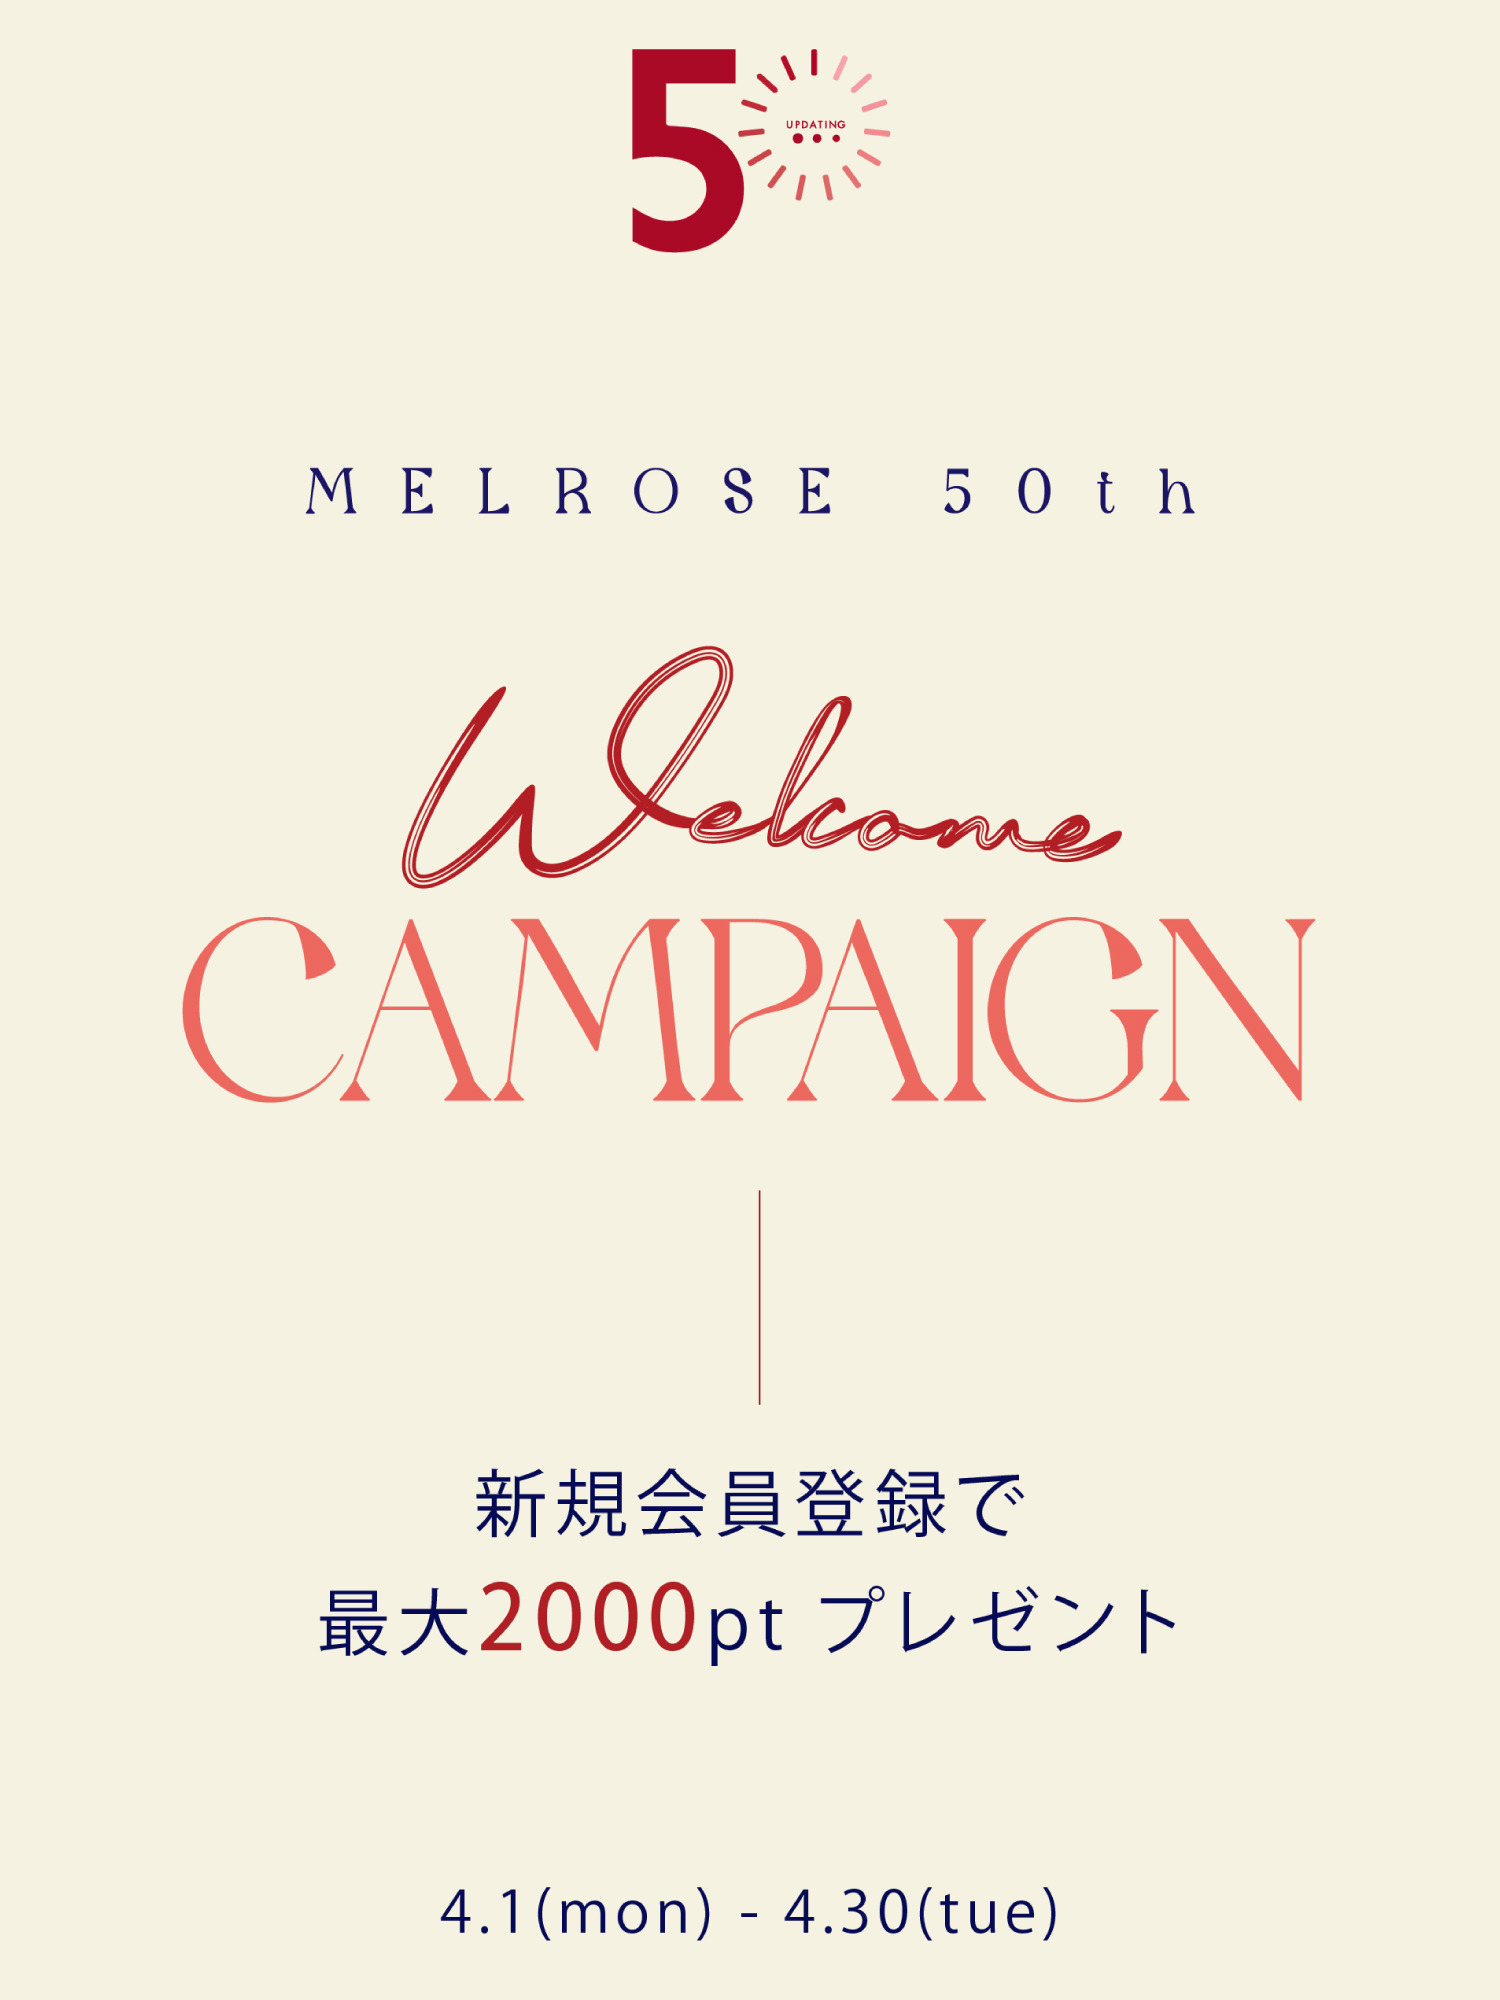 【50th Anniversary】新規会員登録で最大2000ptプレゼント！